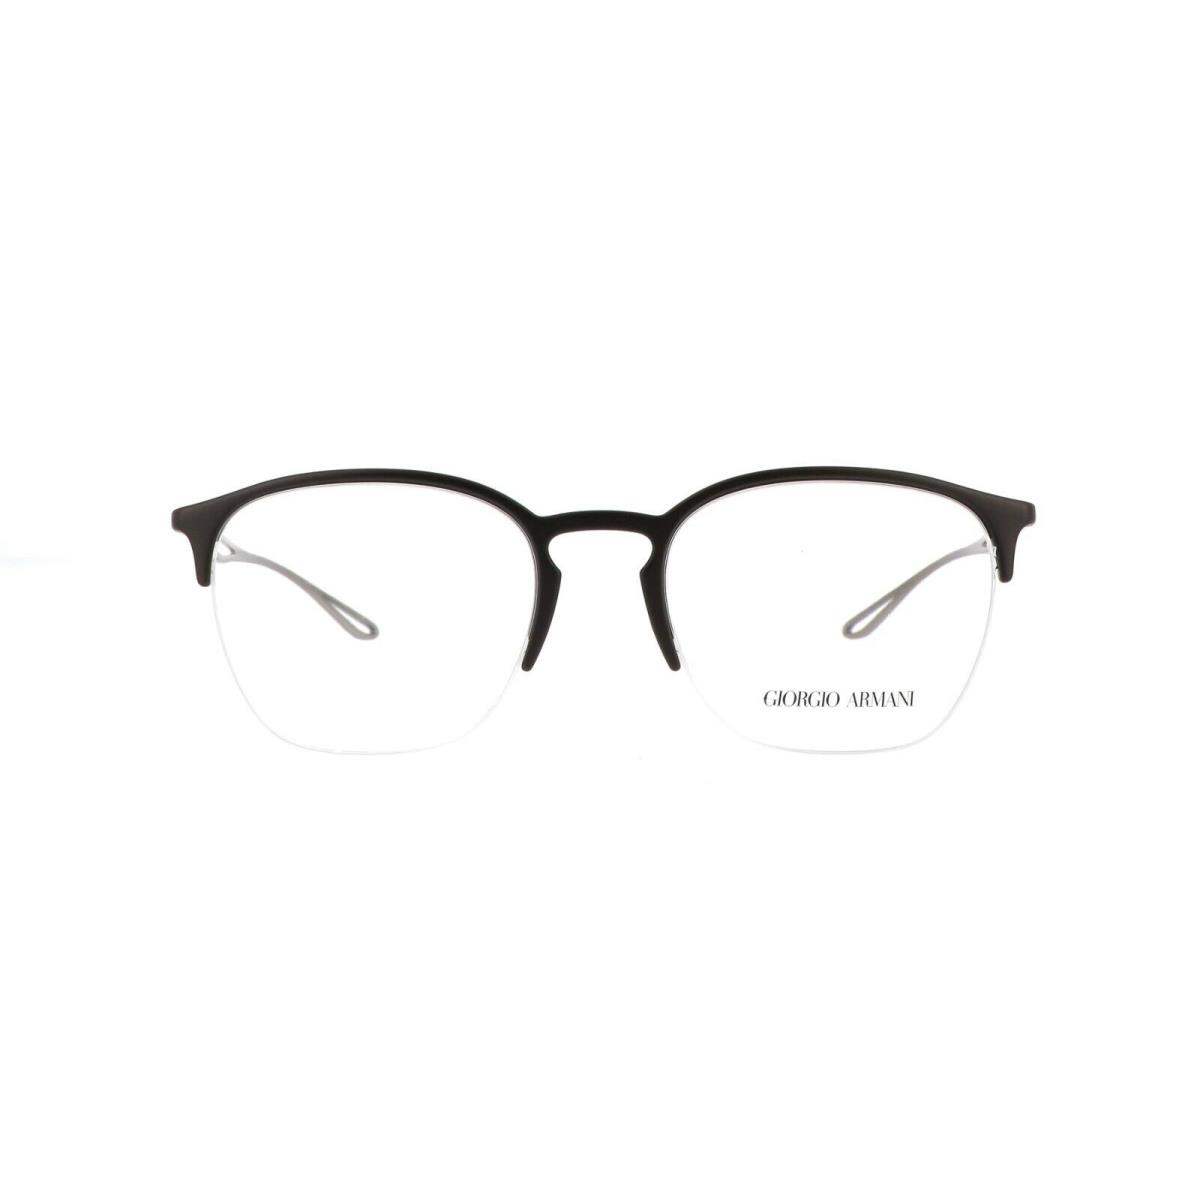 Giorgio Armani Eyeglasses AR7175 5785 Brown Frames 52mm Rx-able ST